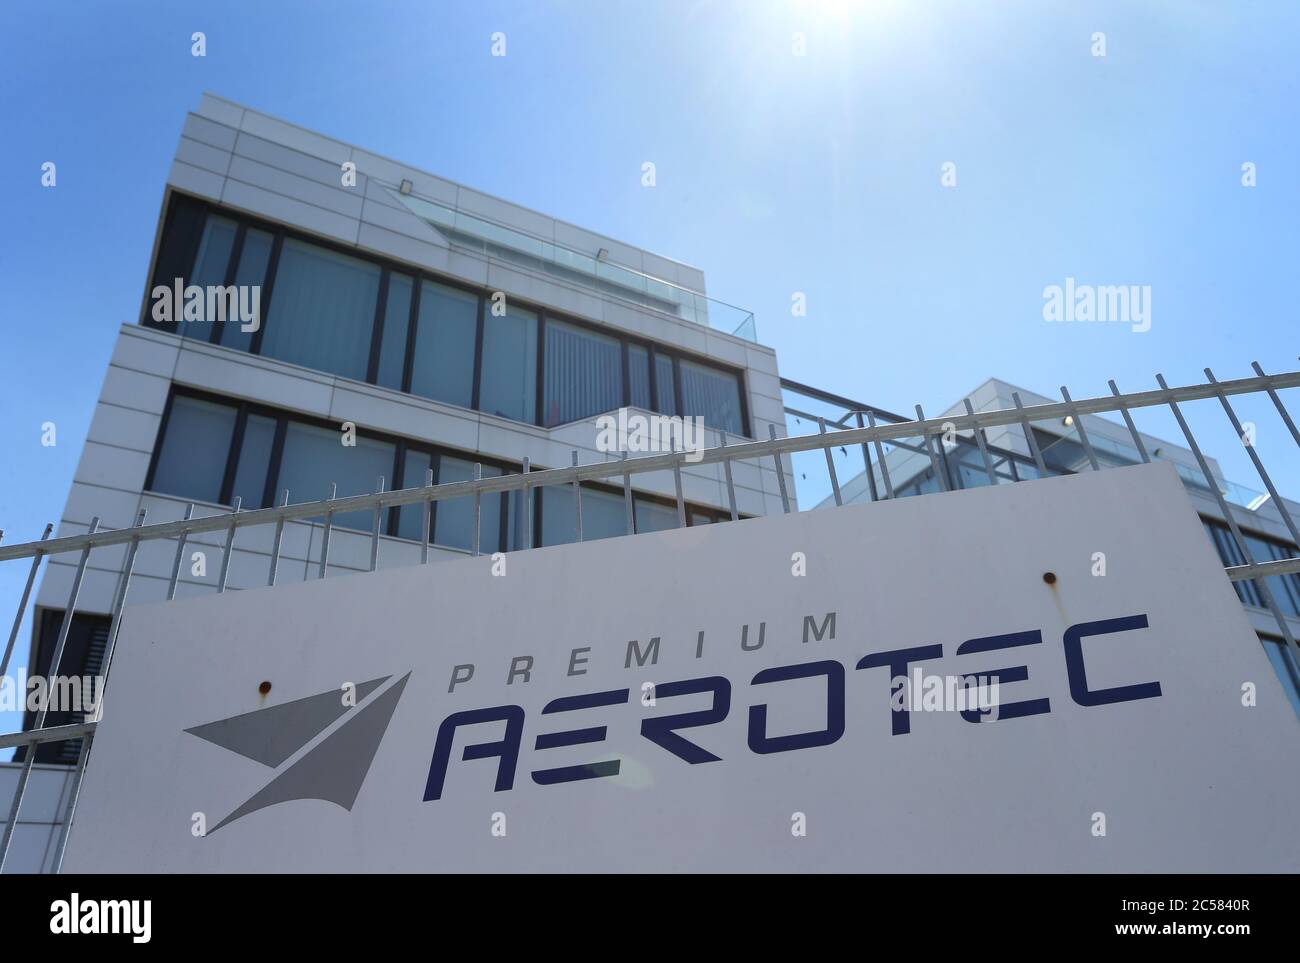 Augsburg Germany 01st July The Headquarters Of The Airbus Subsidiary Premium Aerotec Premium Aerotec Will